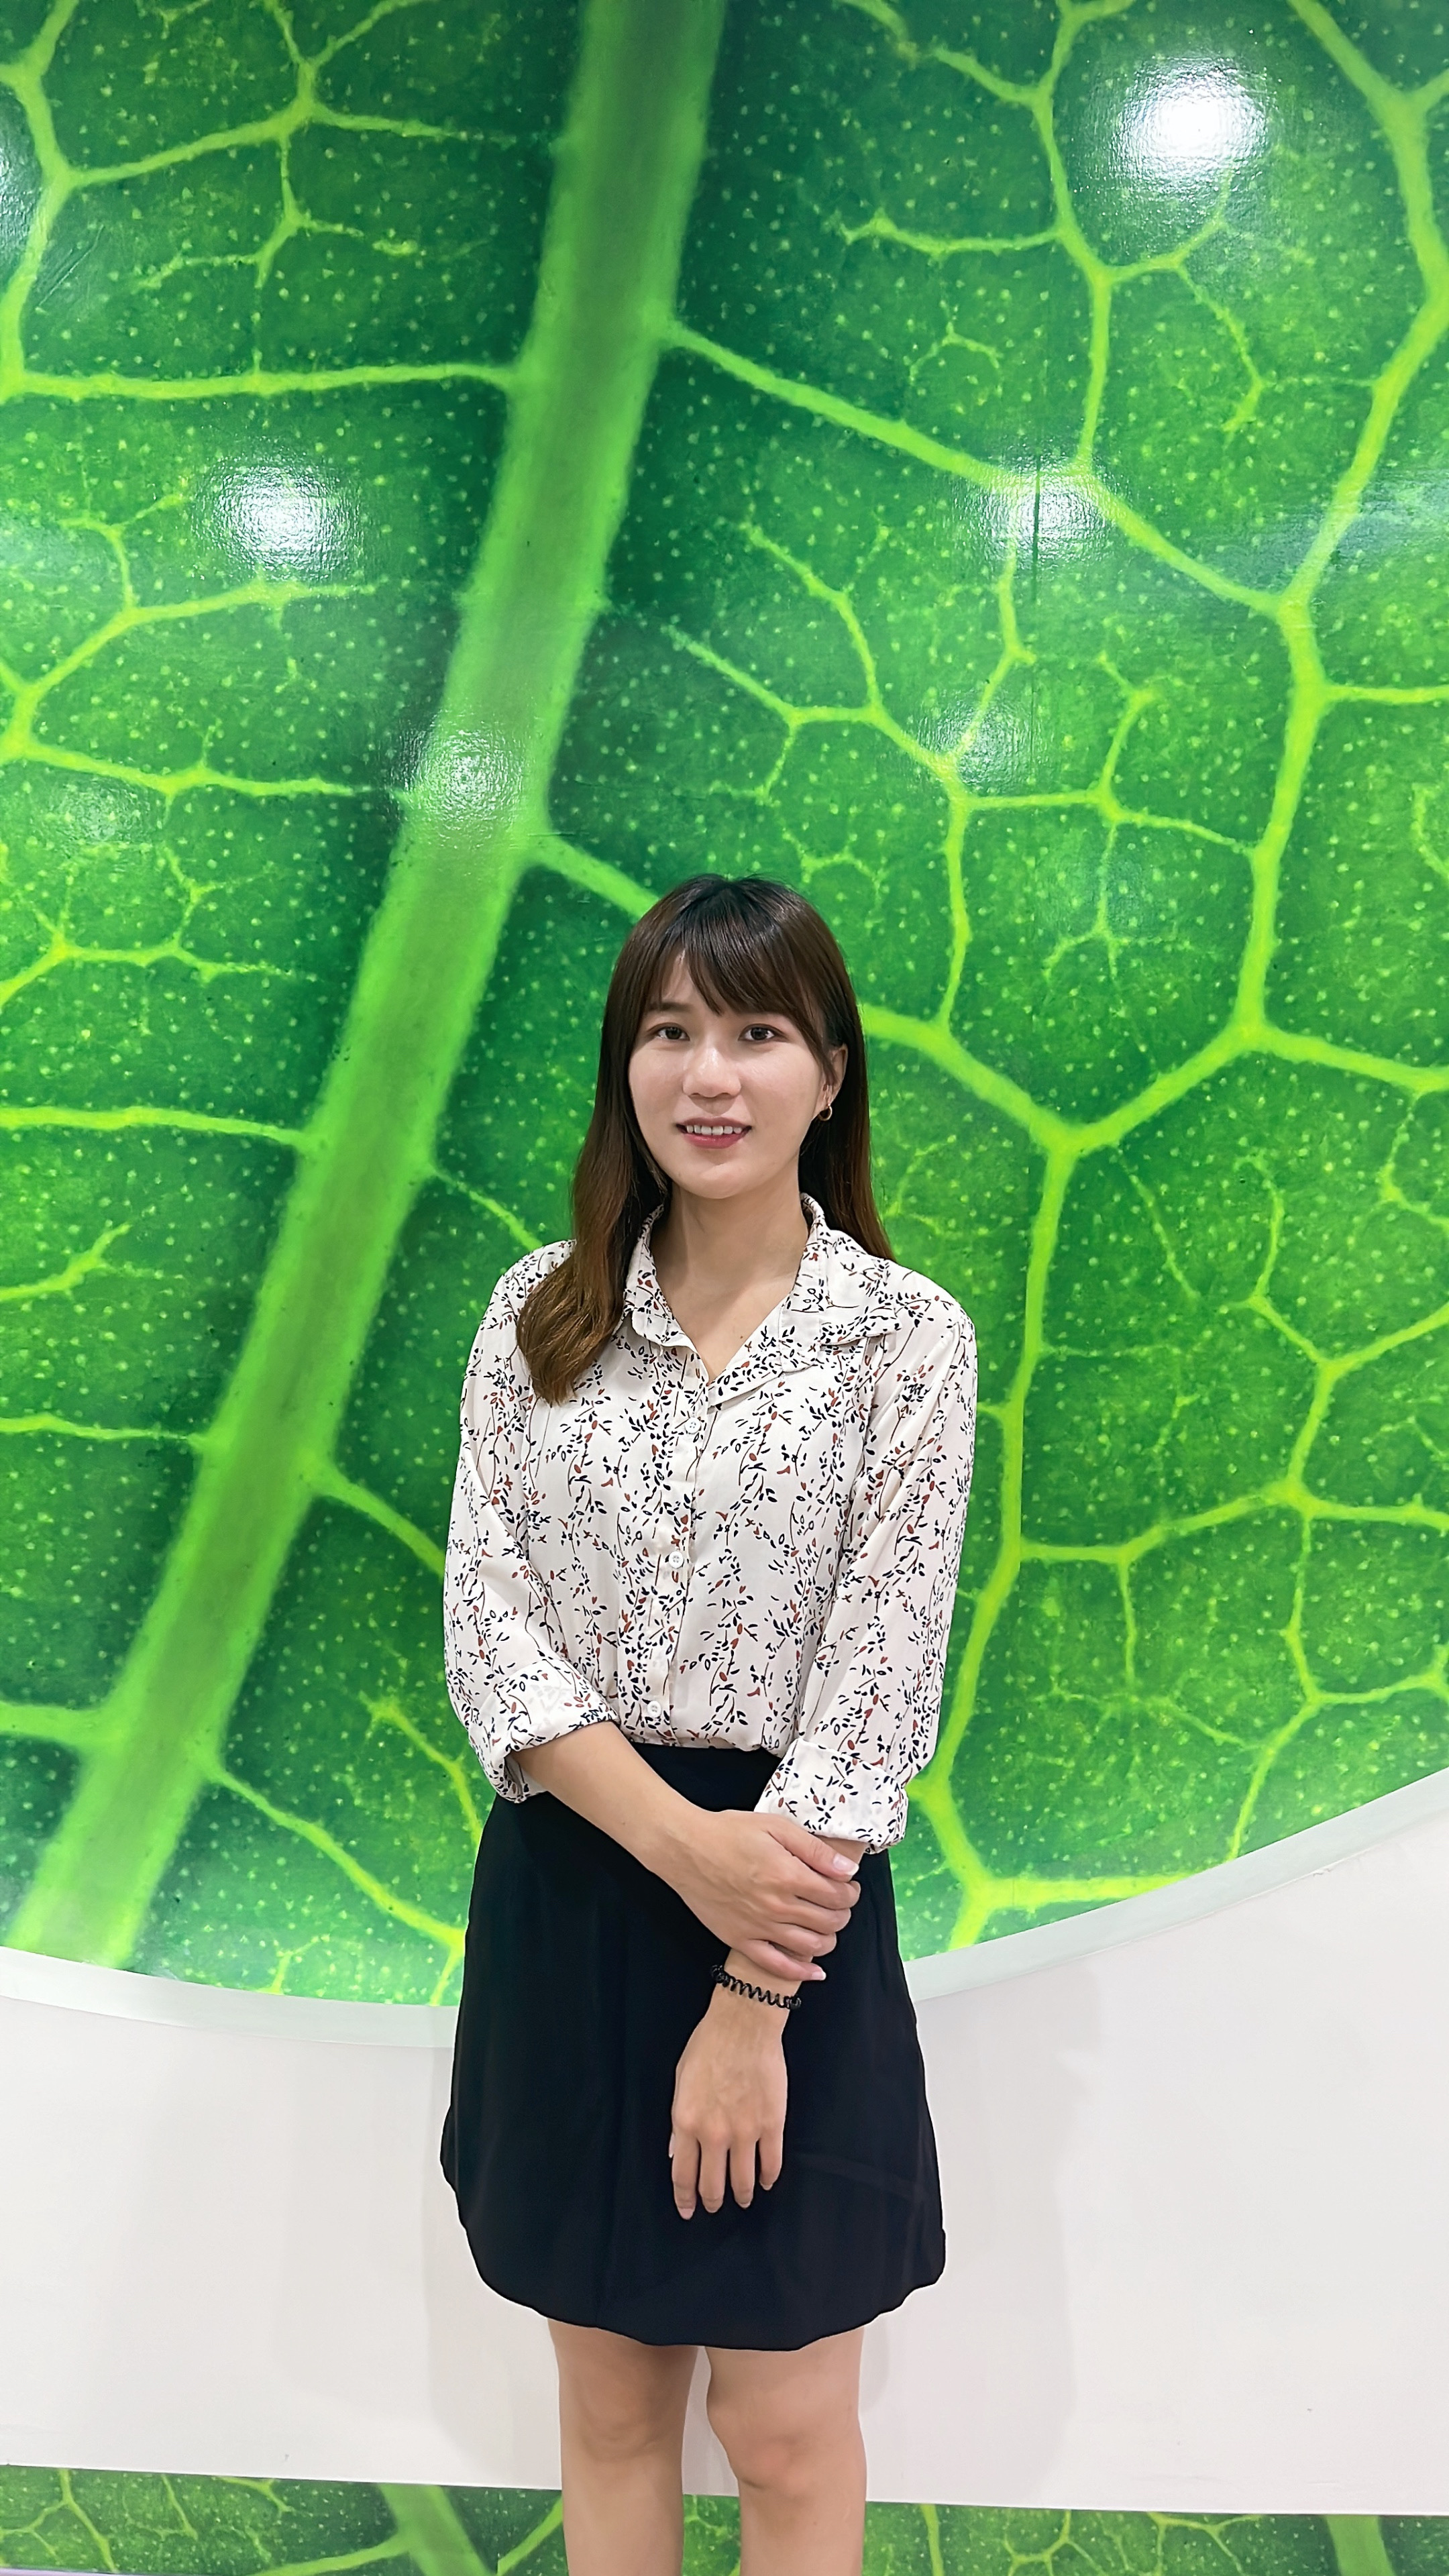 Ms. Yan Ling Lin, Environmental Engineer